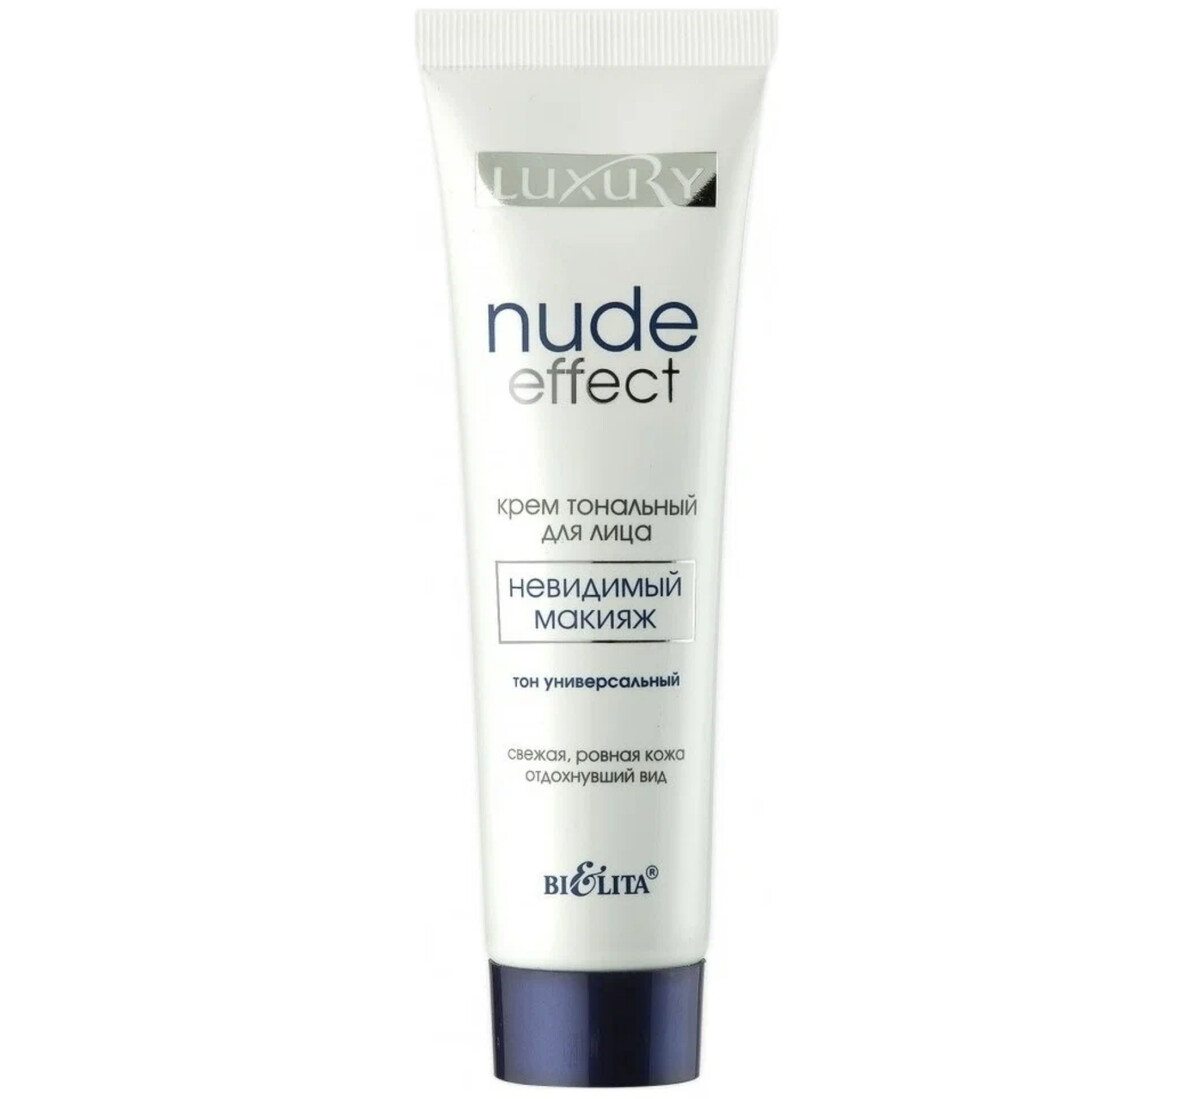   nude effect  (.) 30 